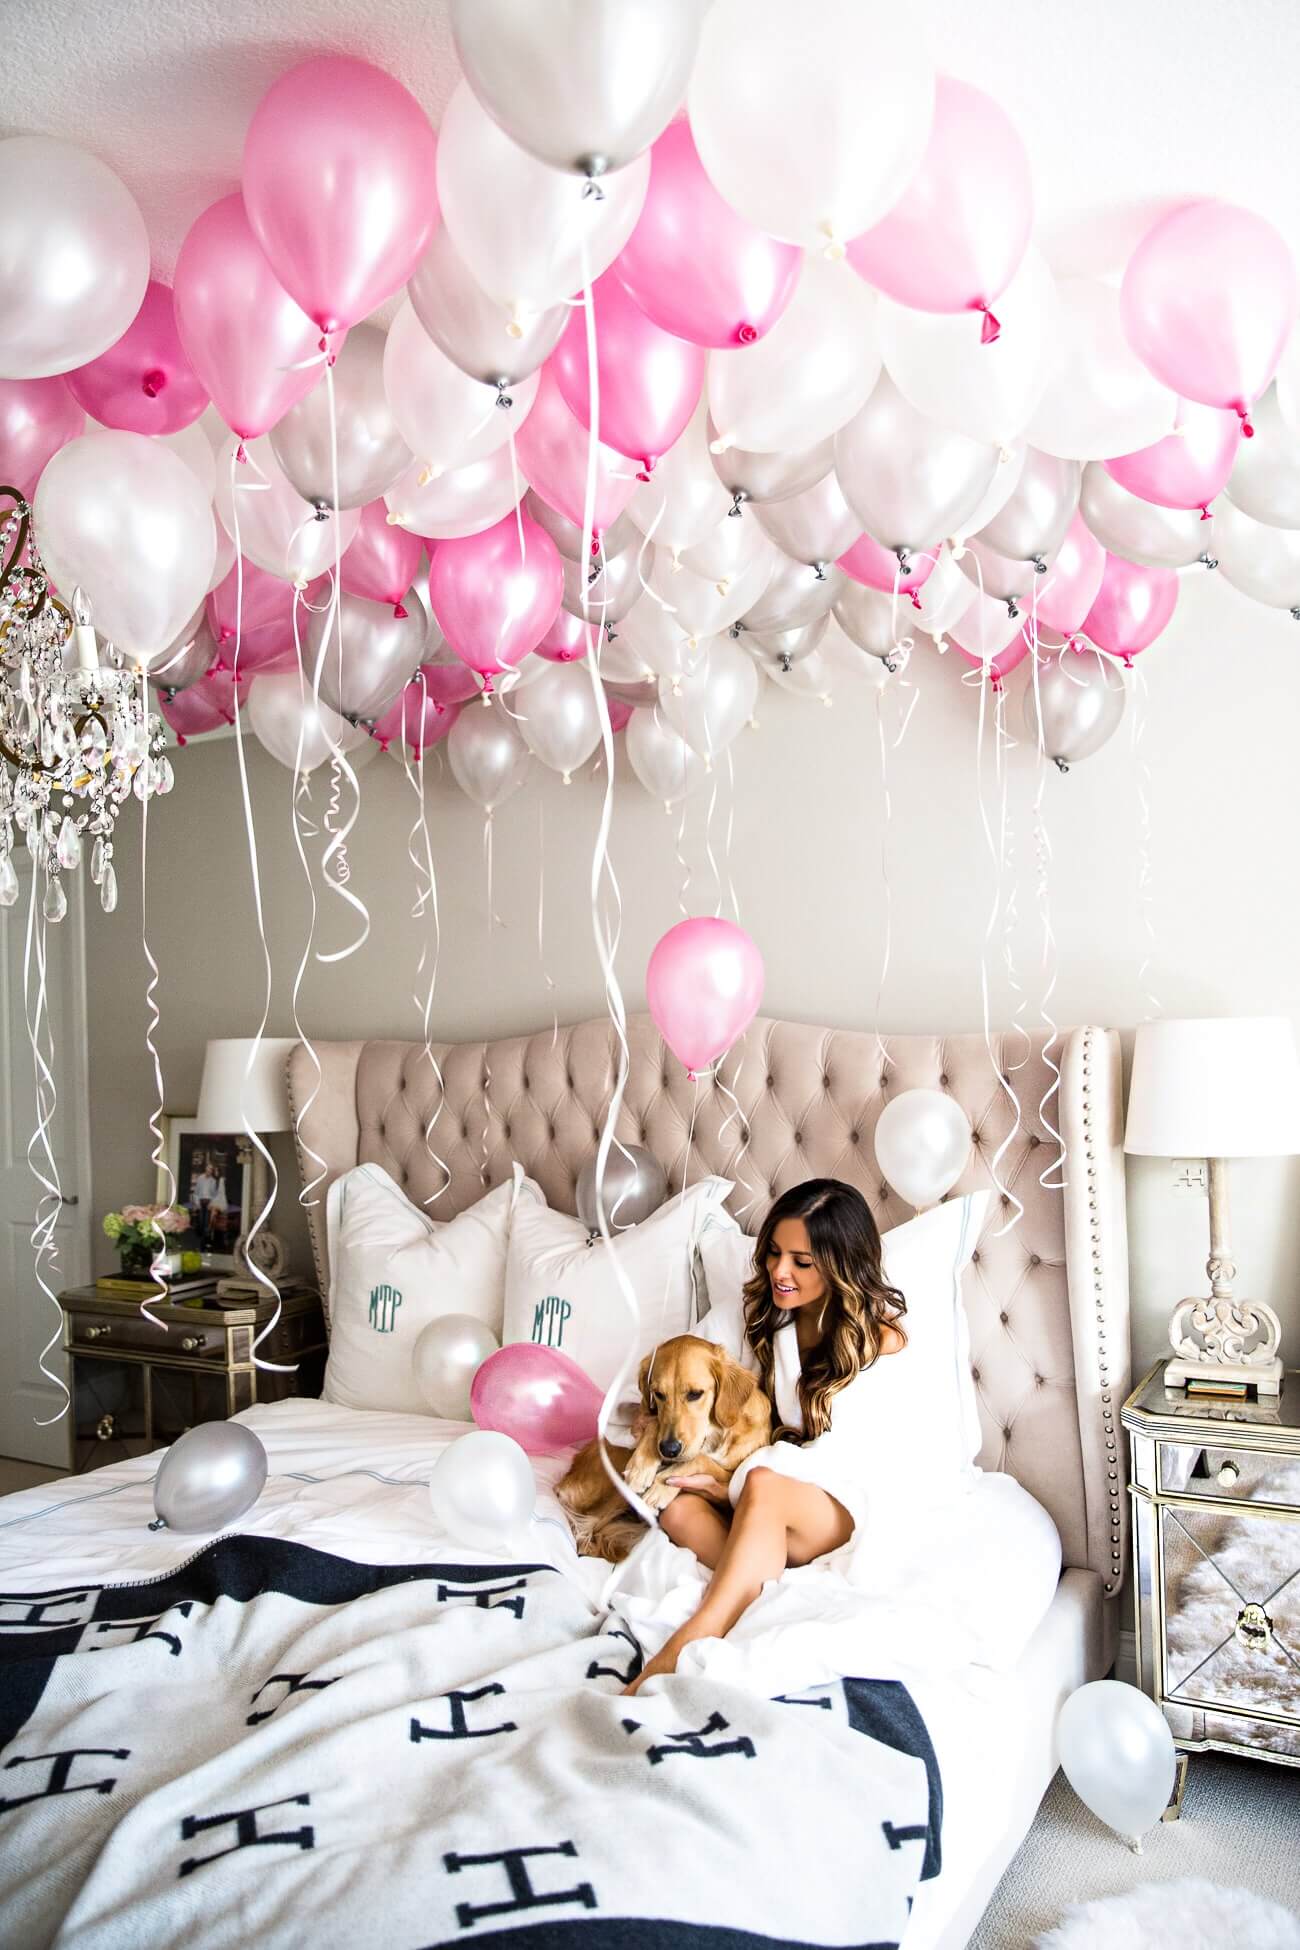 fashion blogger mia mia mine at home with birthday balloons